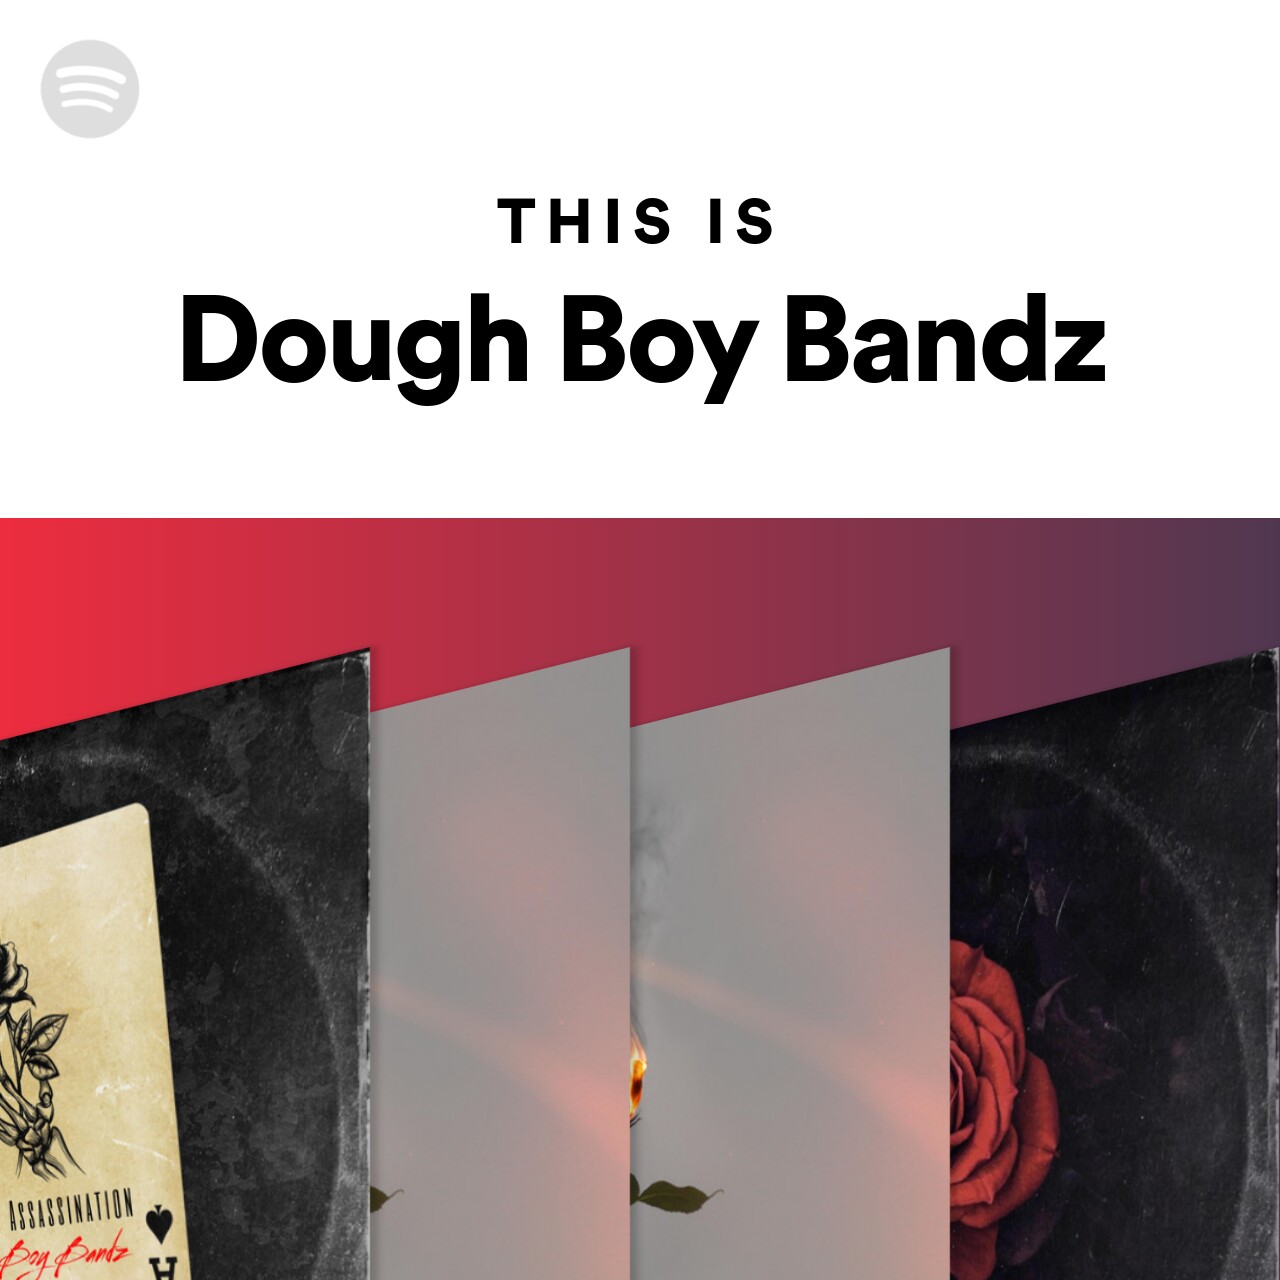 This Is Dough Boy Bandz